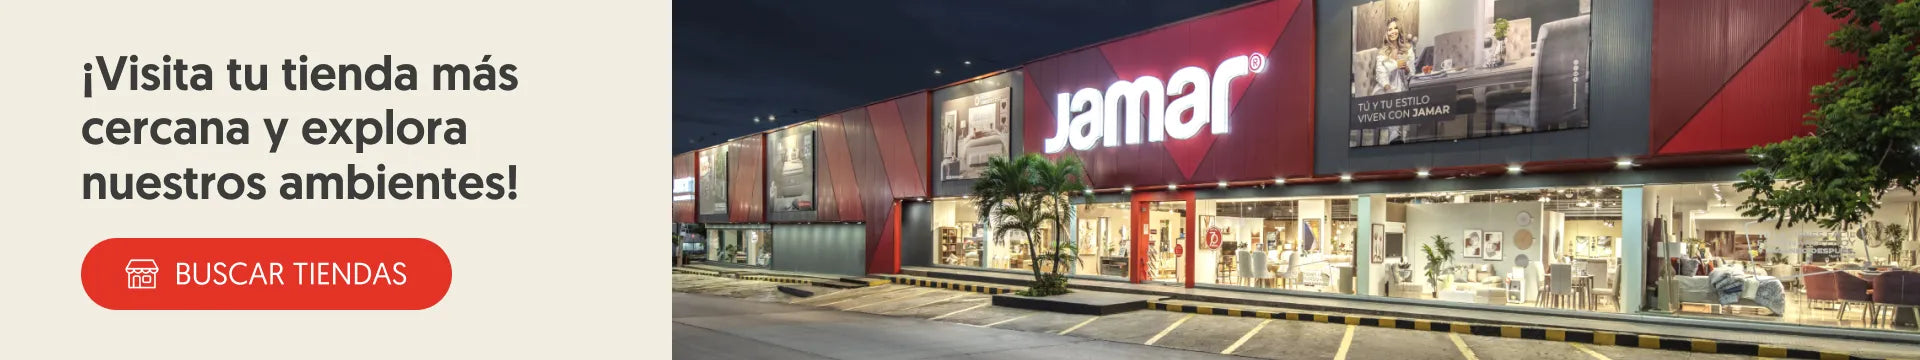 Buscar tiendas Jamar